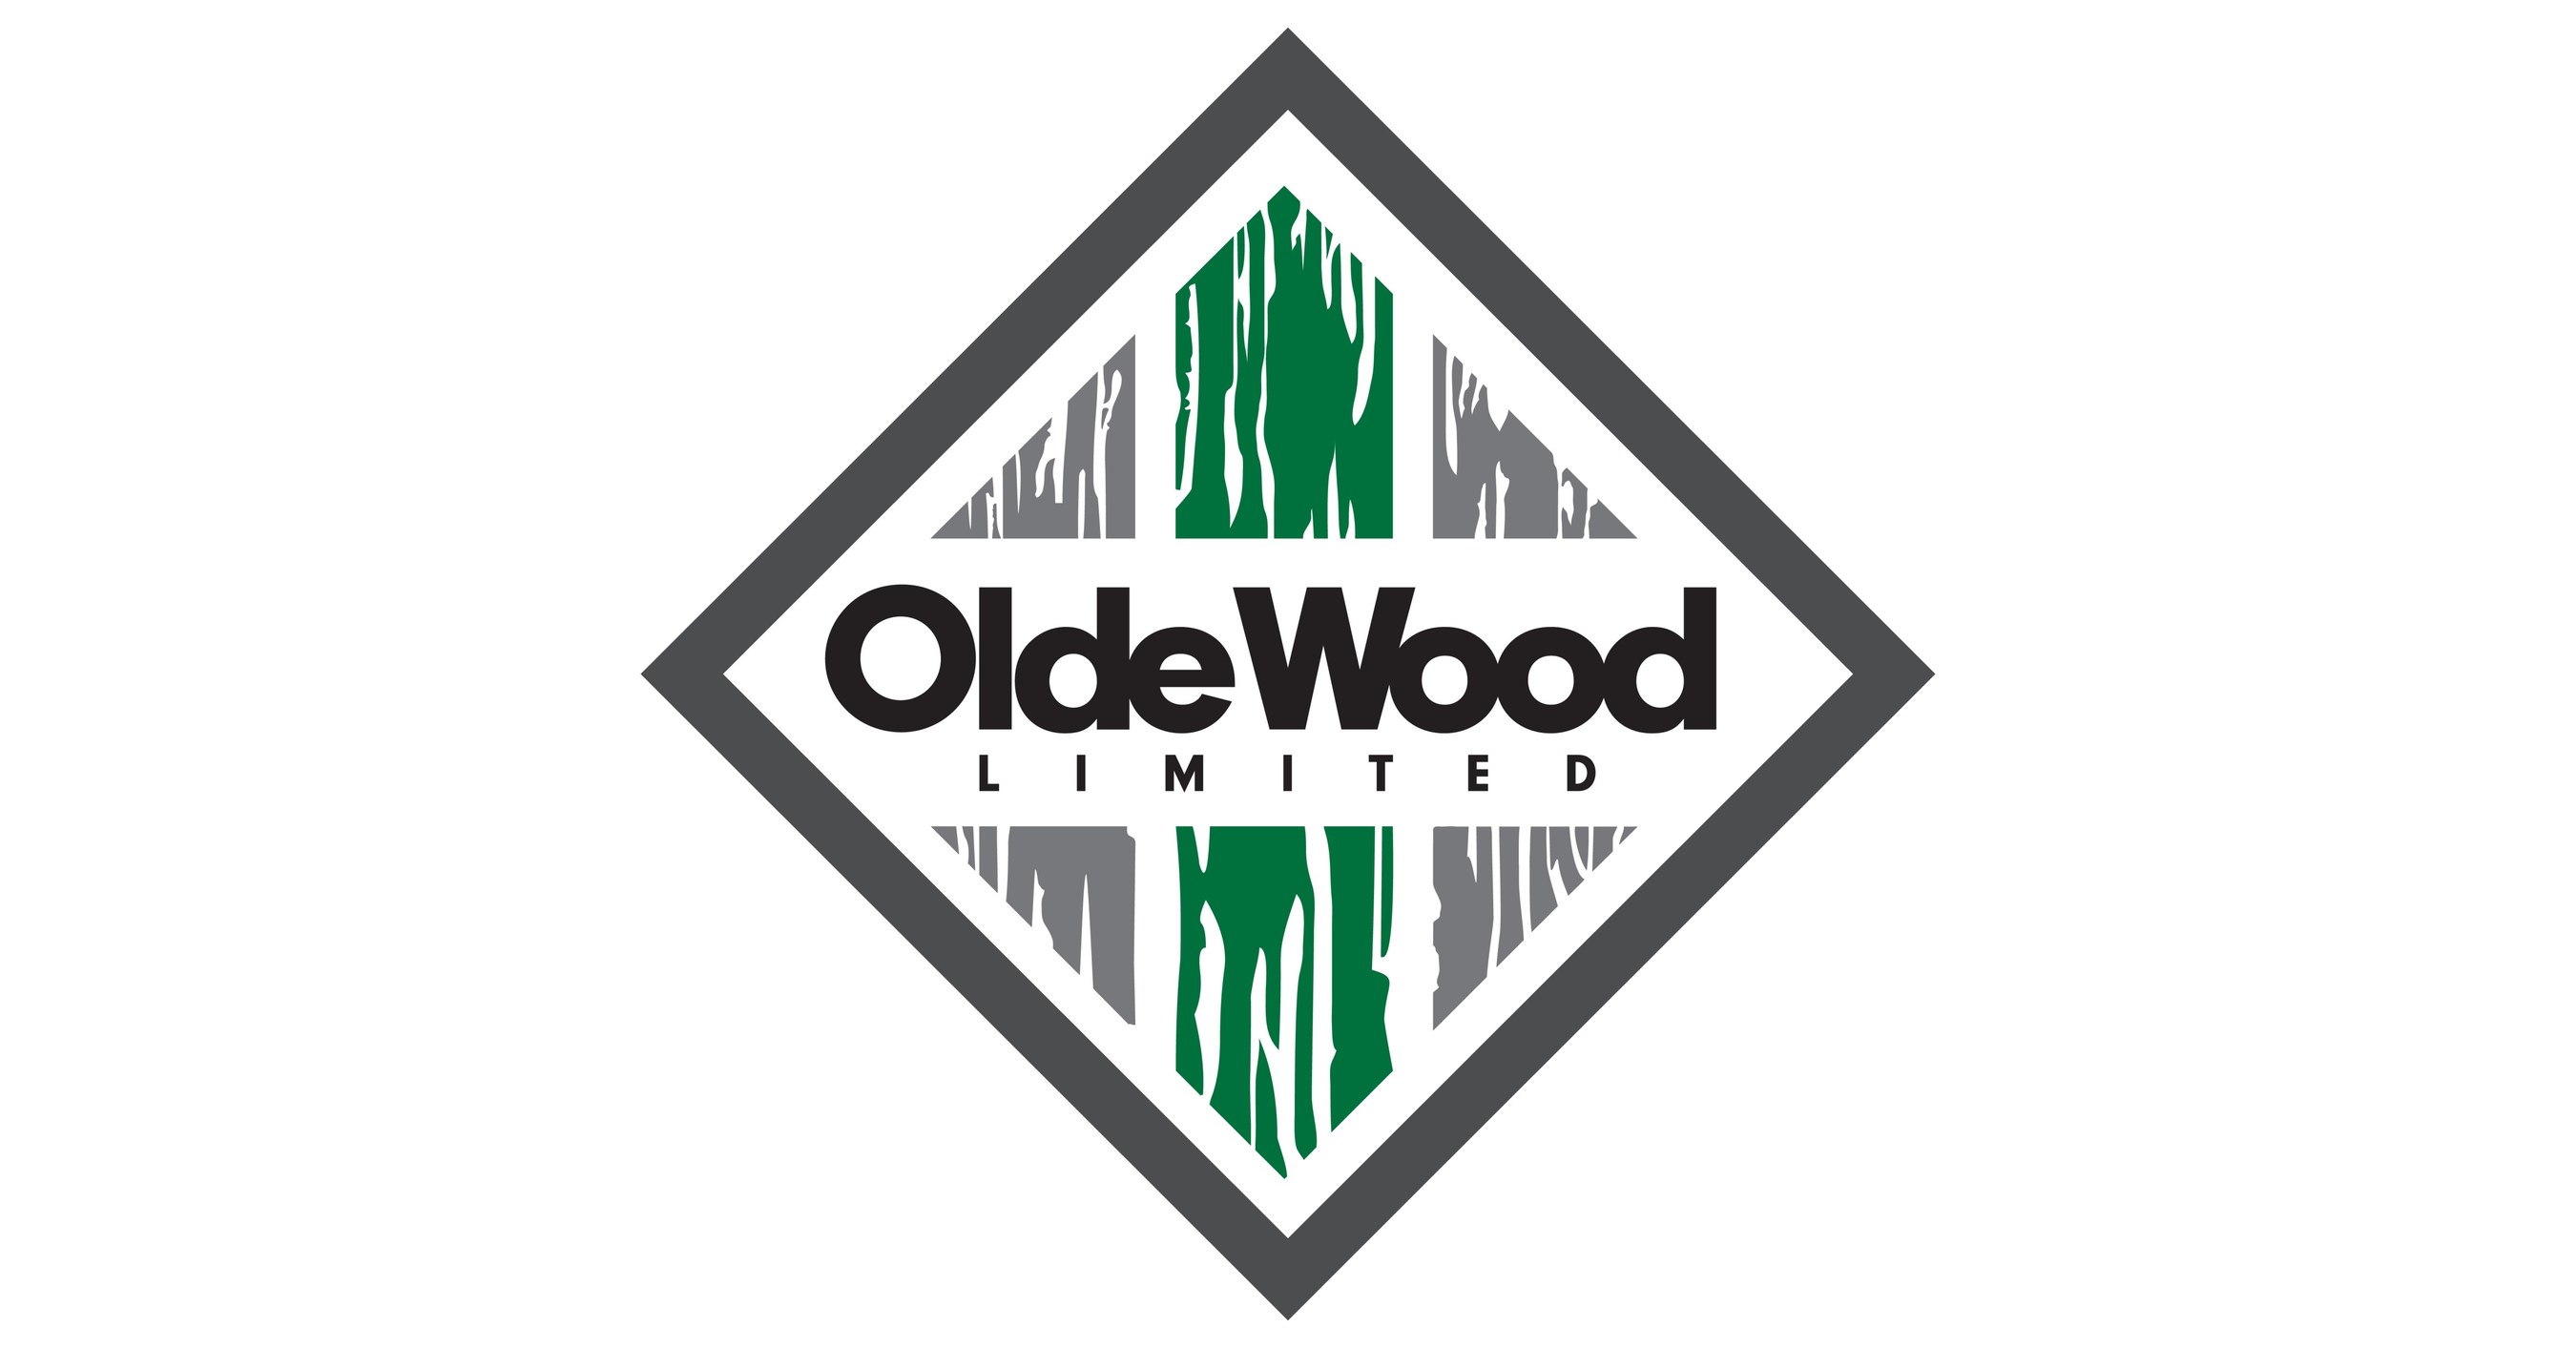 Olde Wood Limited Creates Patent Pending Hemp Wood Filler Product, 2020-12-01